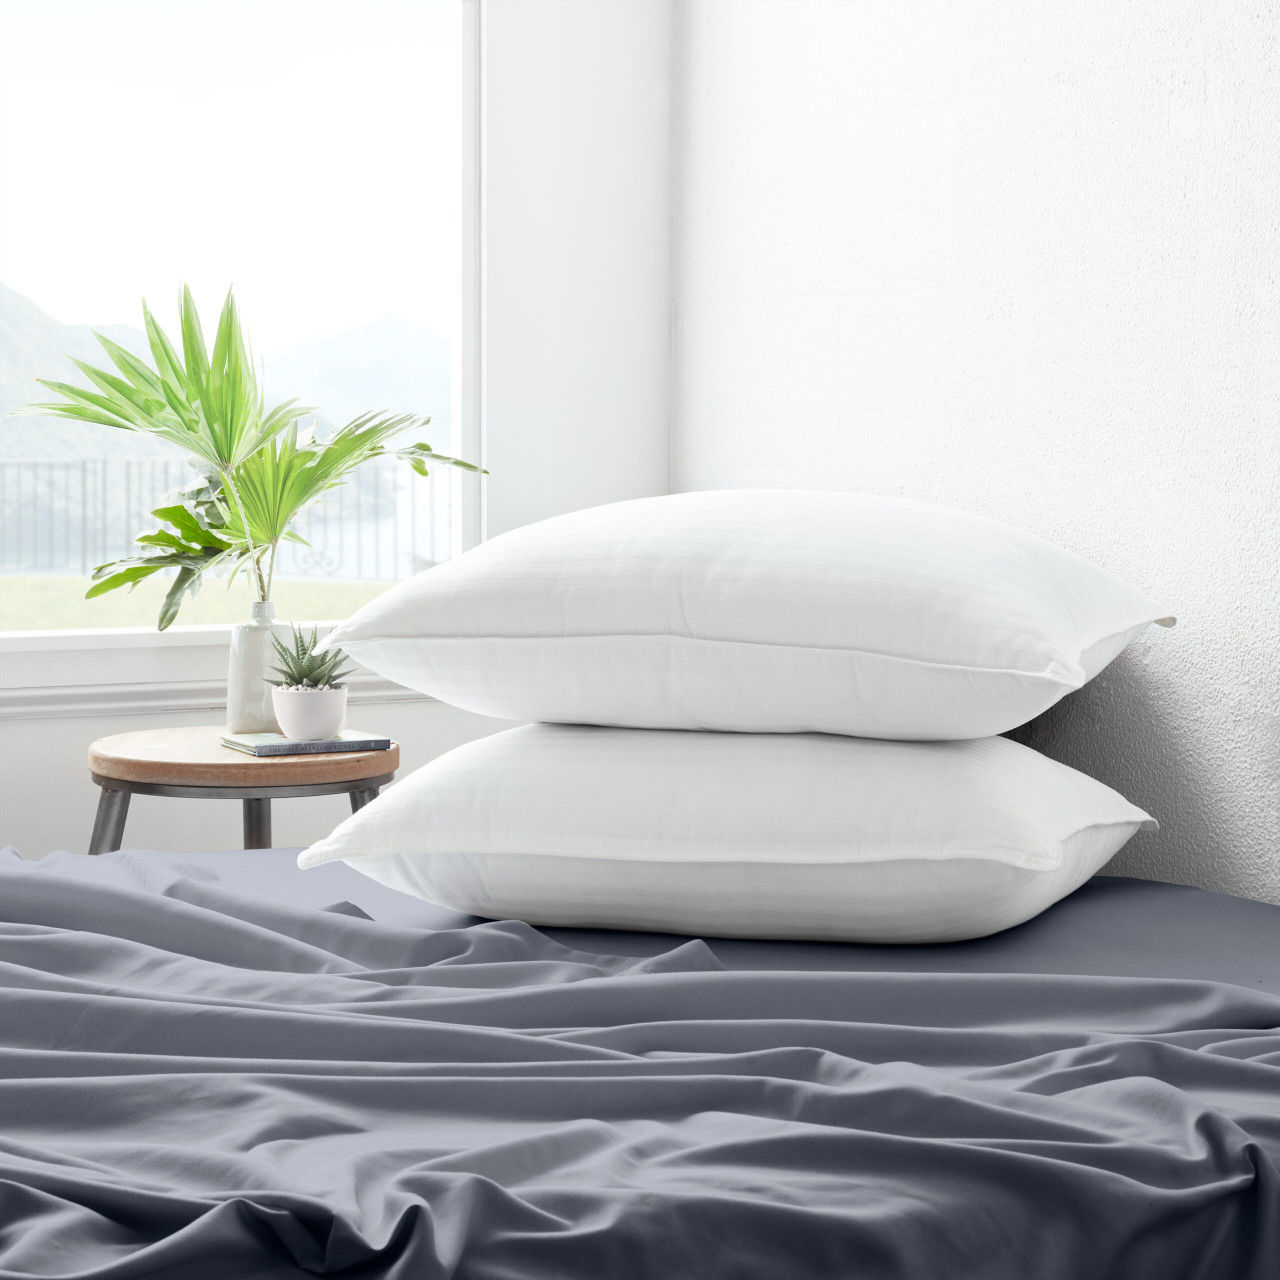 Will the plush down-alternative gel-fiber pillow shift during sleep?